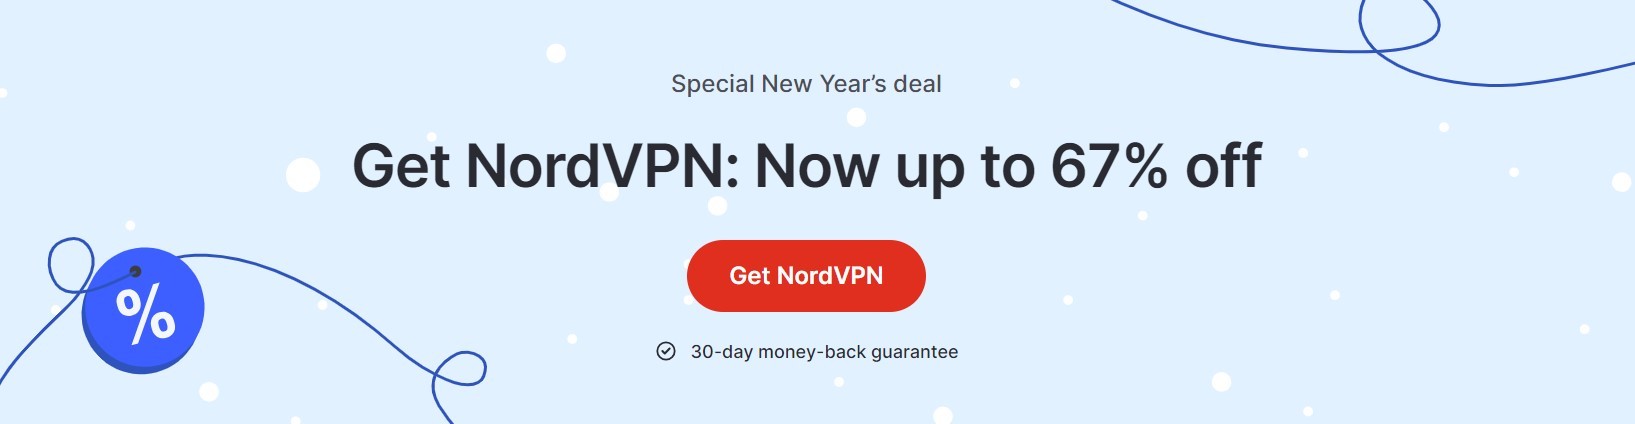 NordVPN, New Year Deal, jadirectives